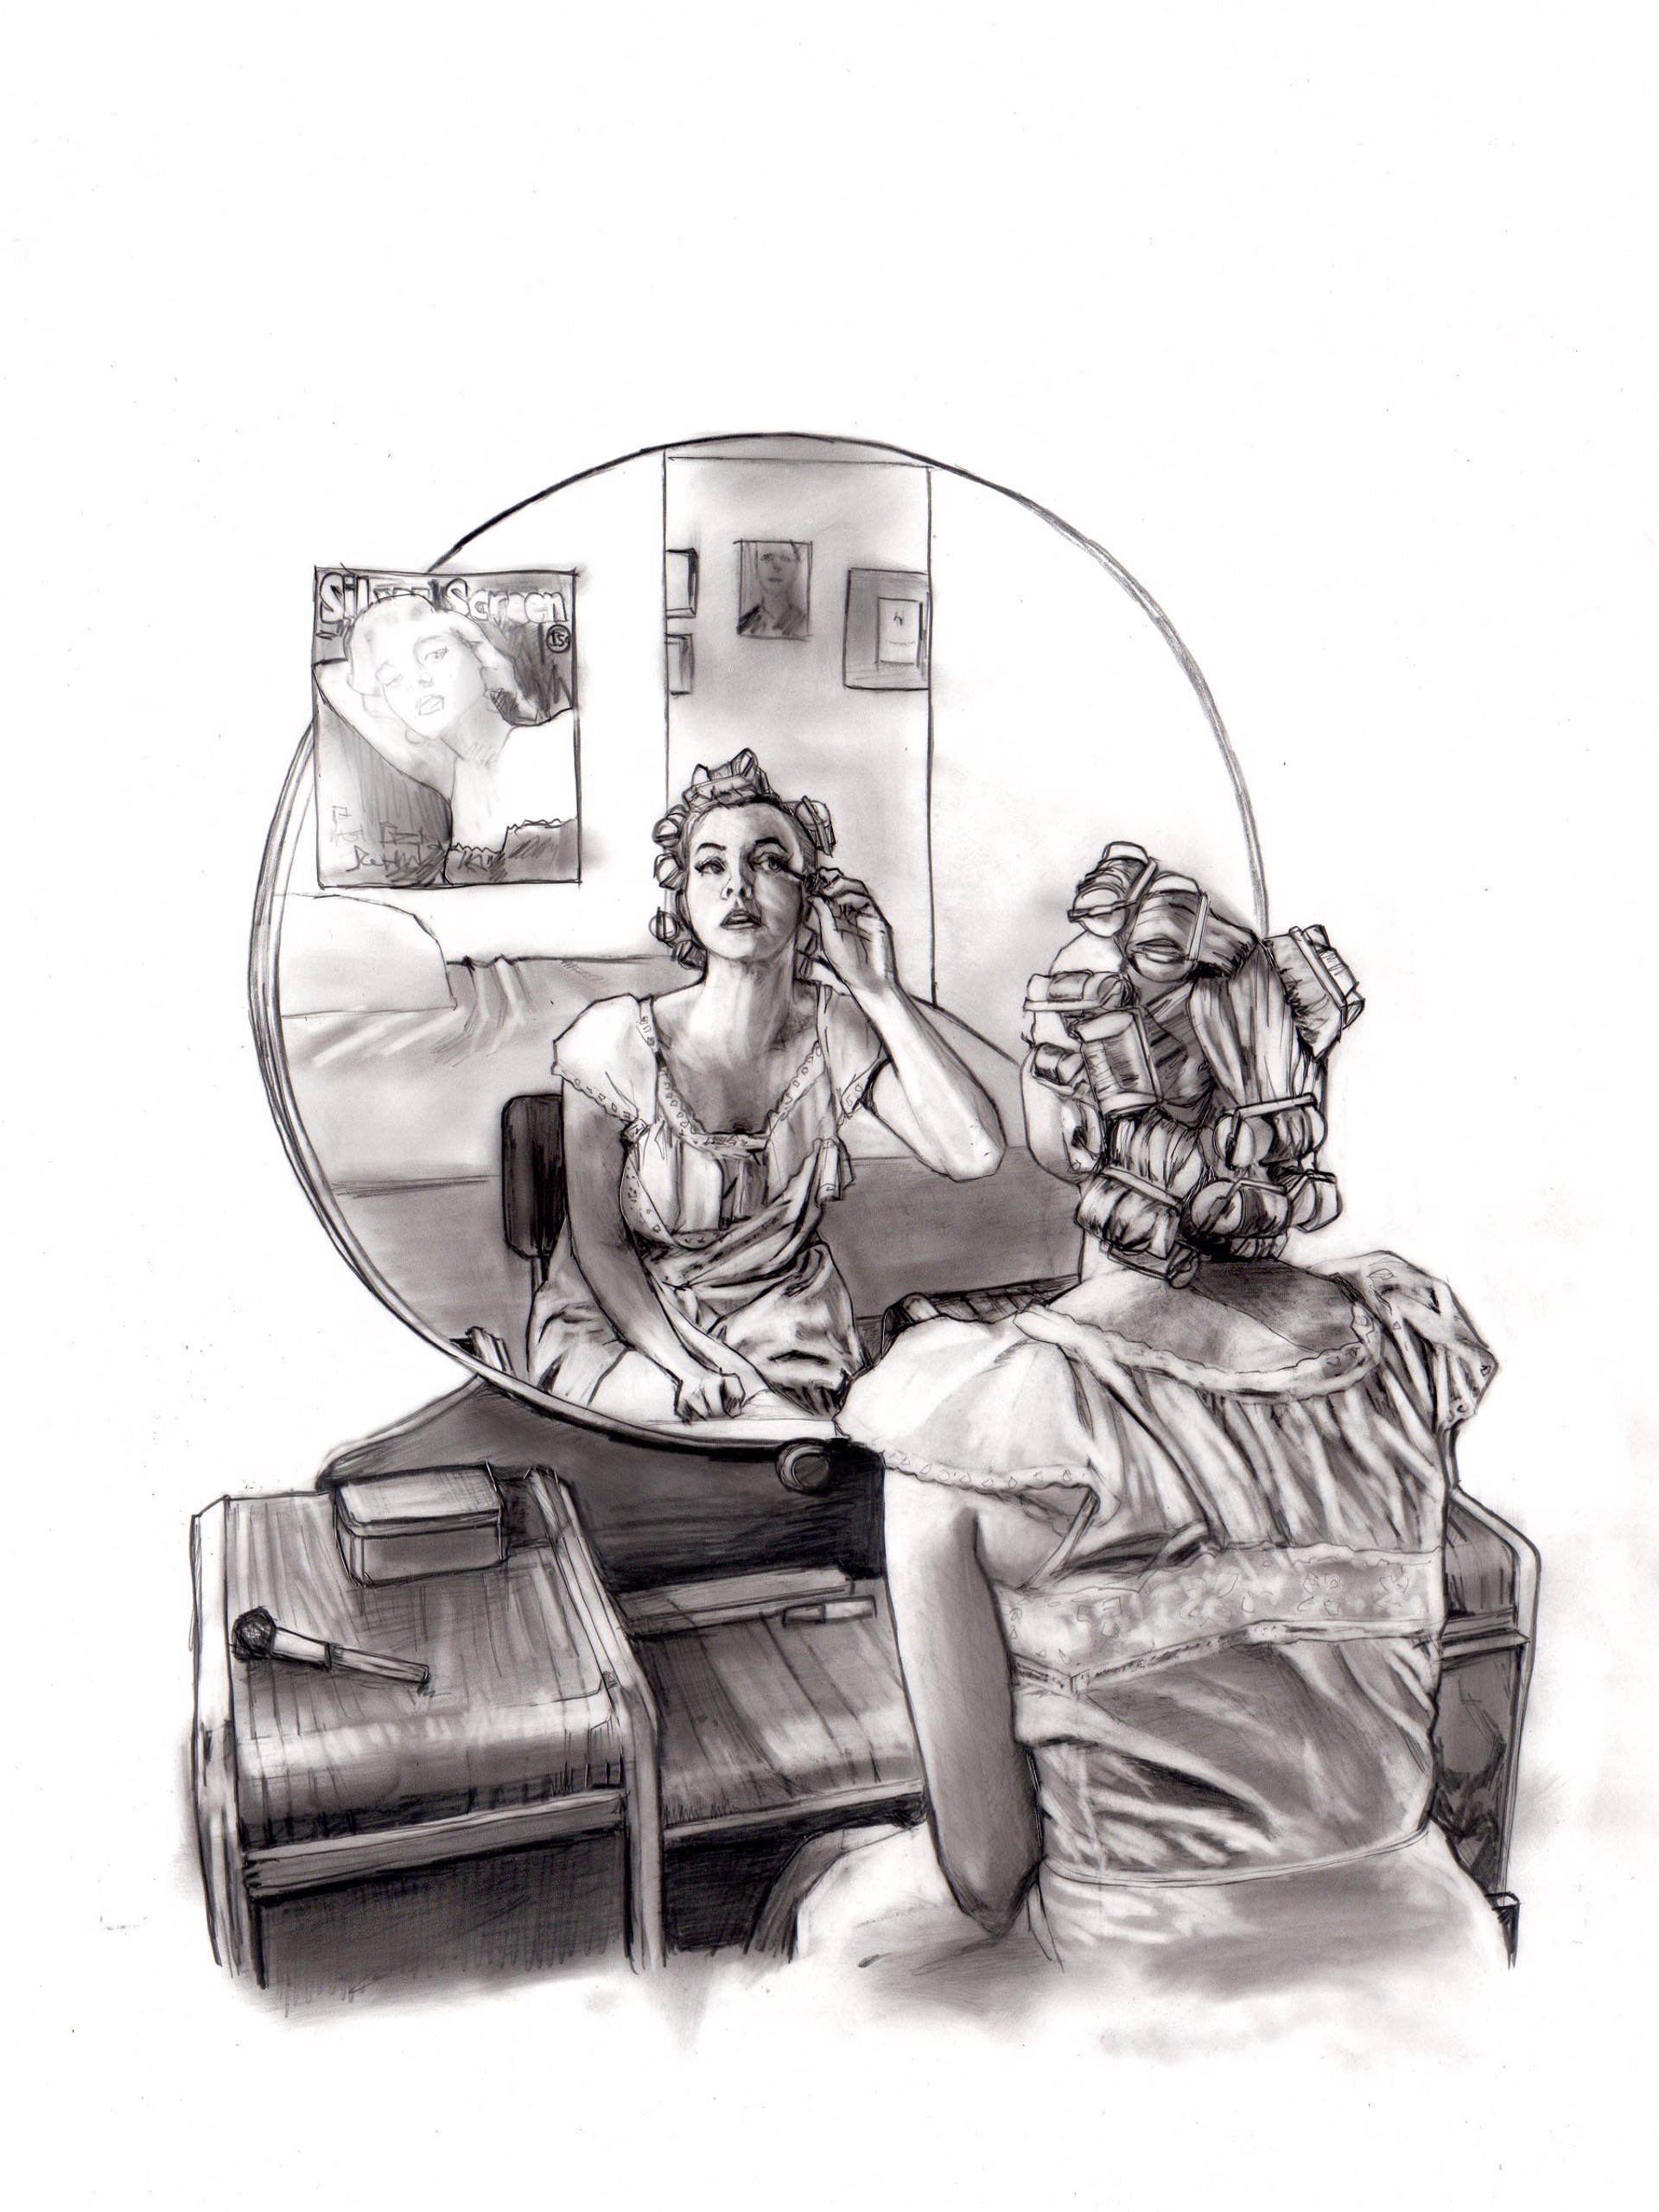 Vanity - study sketch by Kelly Grace